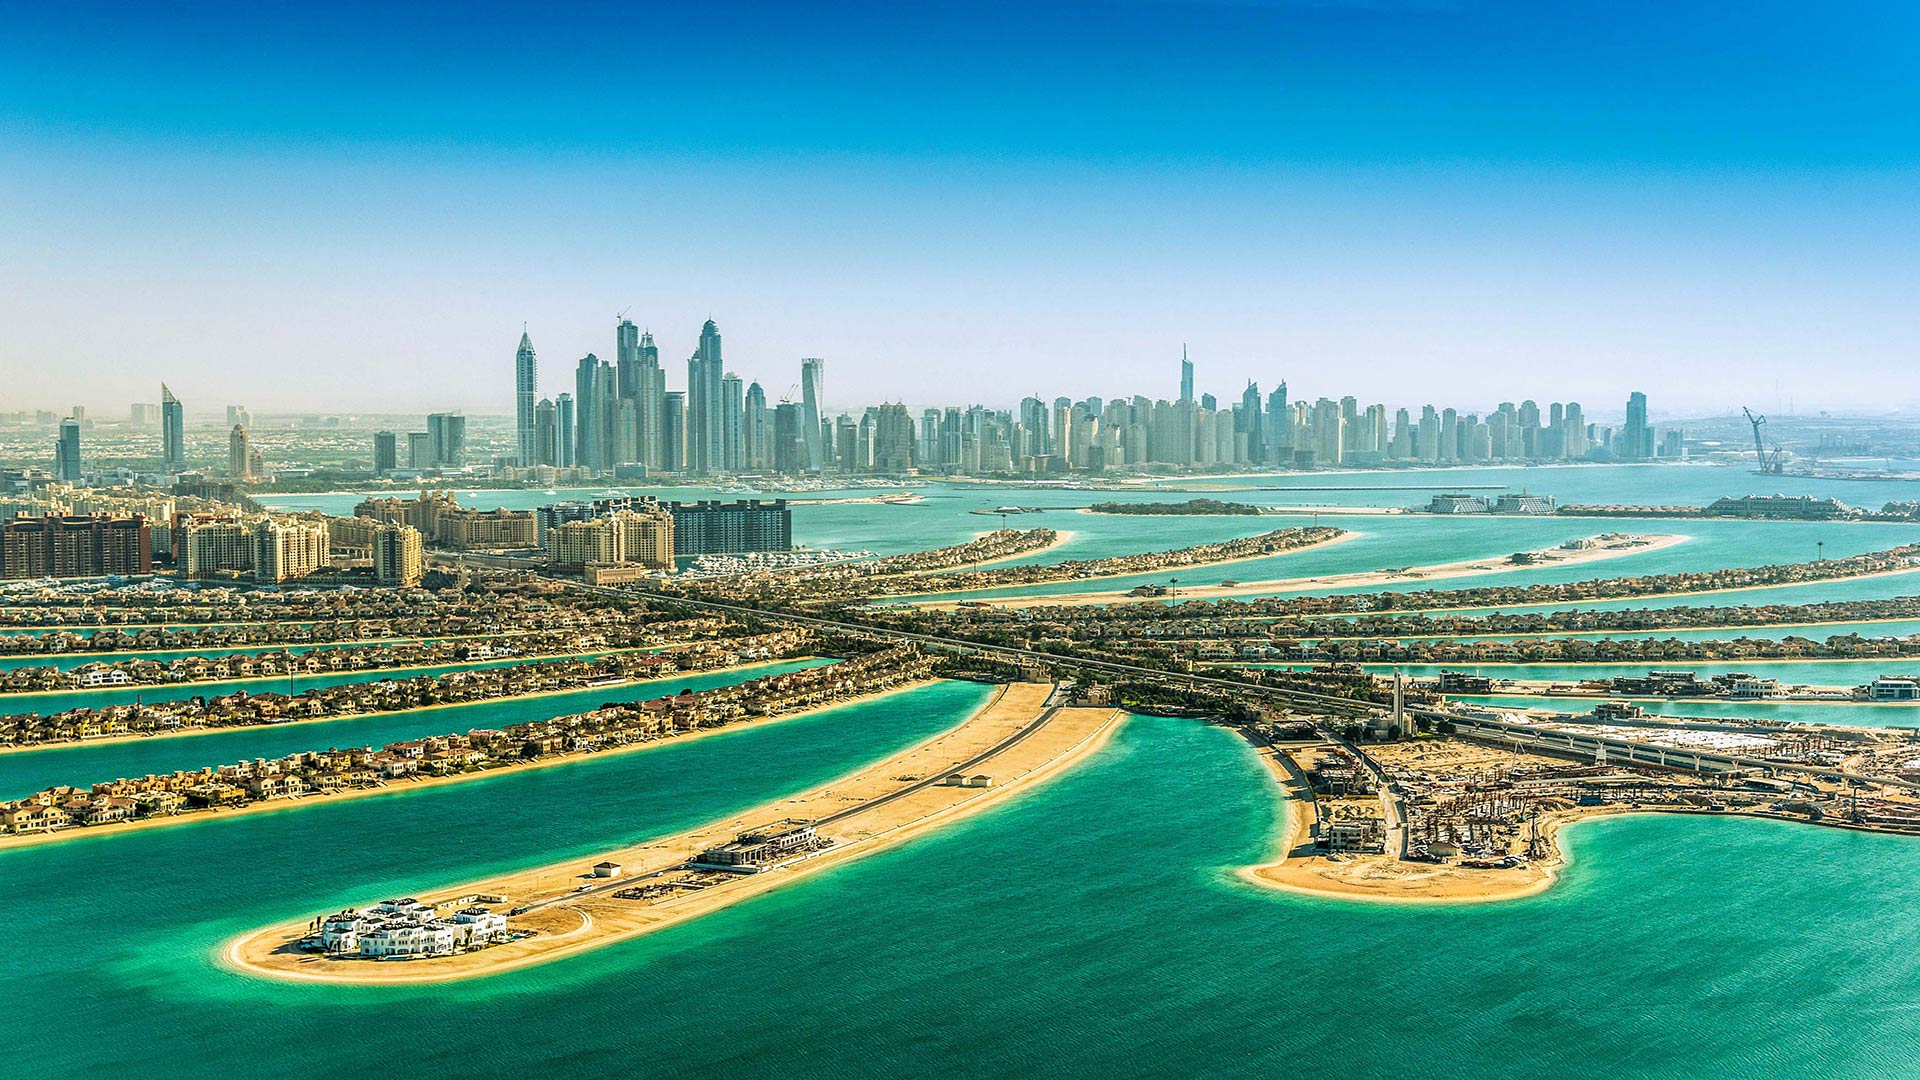 PALM BEACH TOWERS 3 by Nakheel Properties in Palm Jumeirah, Dubai, UAE - 2